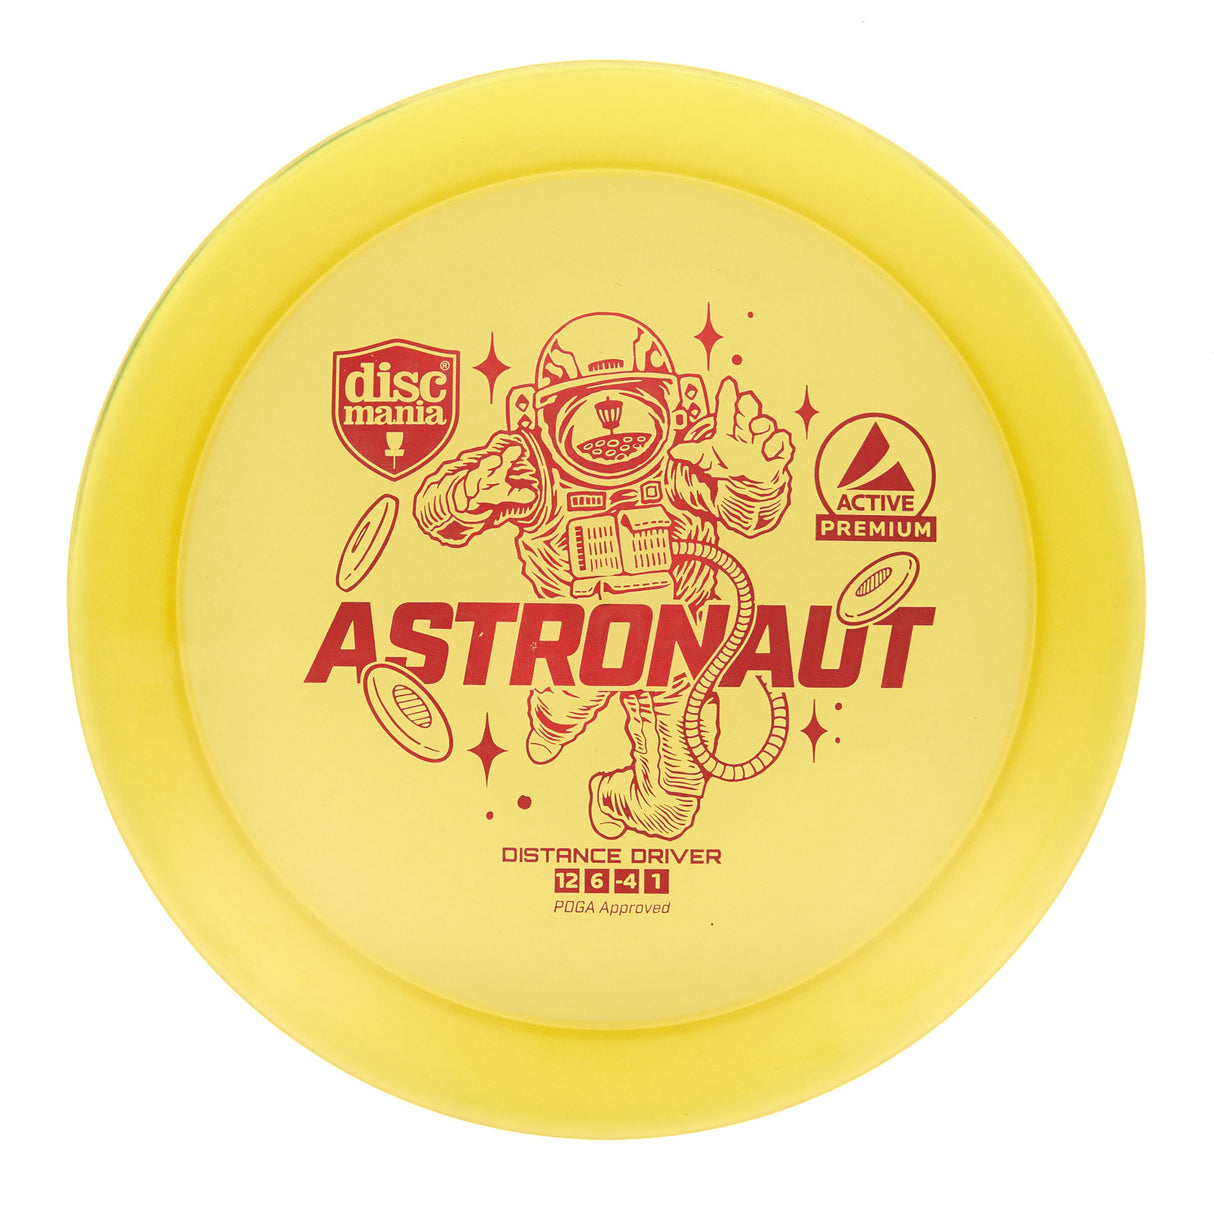 Discmania Astronaut - Active Premium 173g | Style 0004